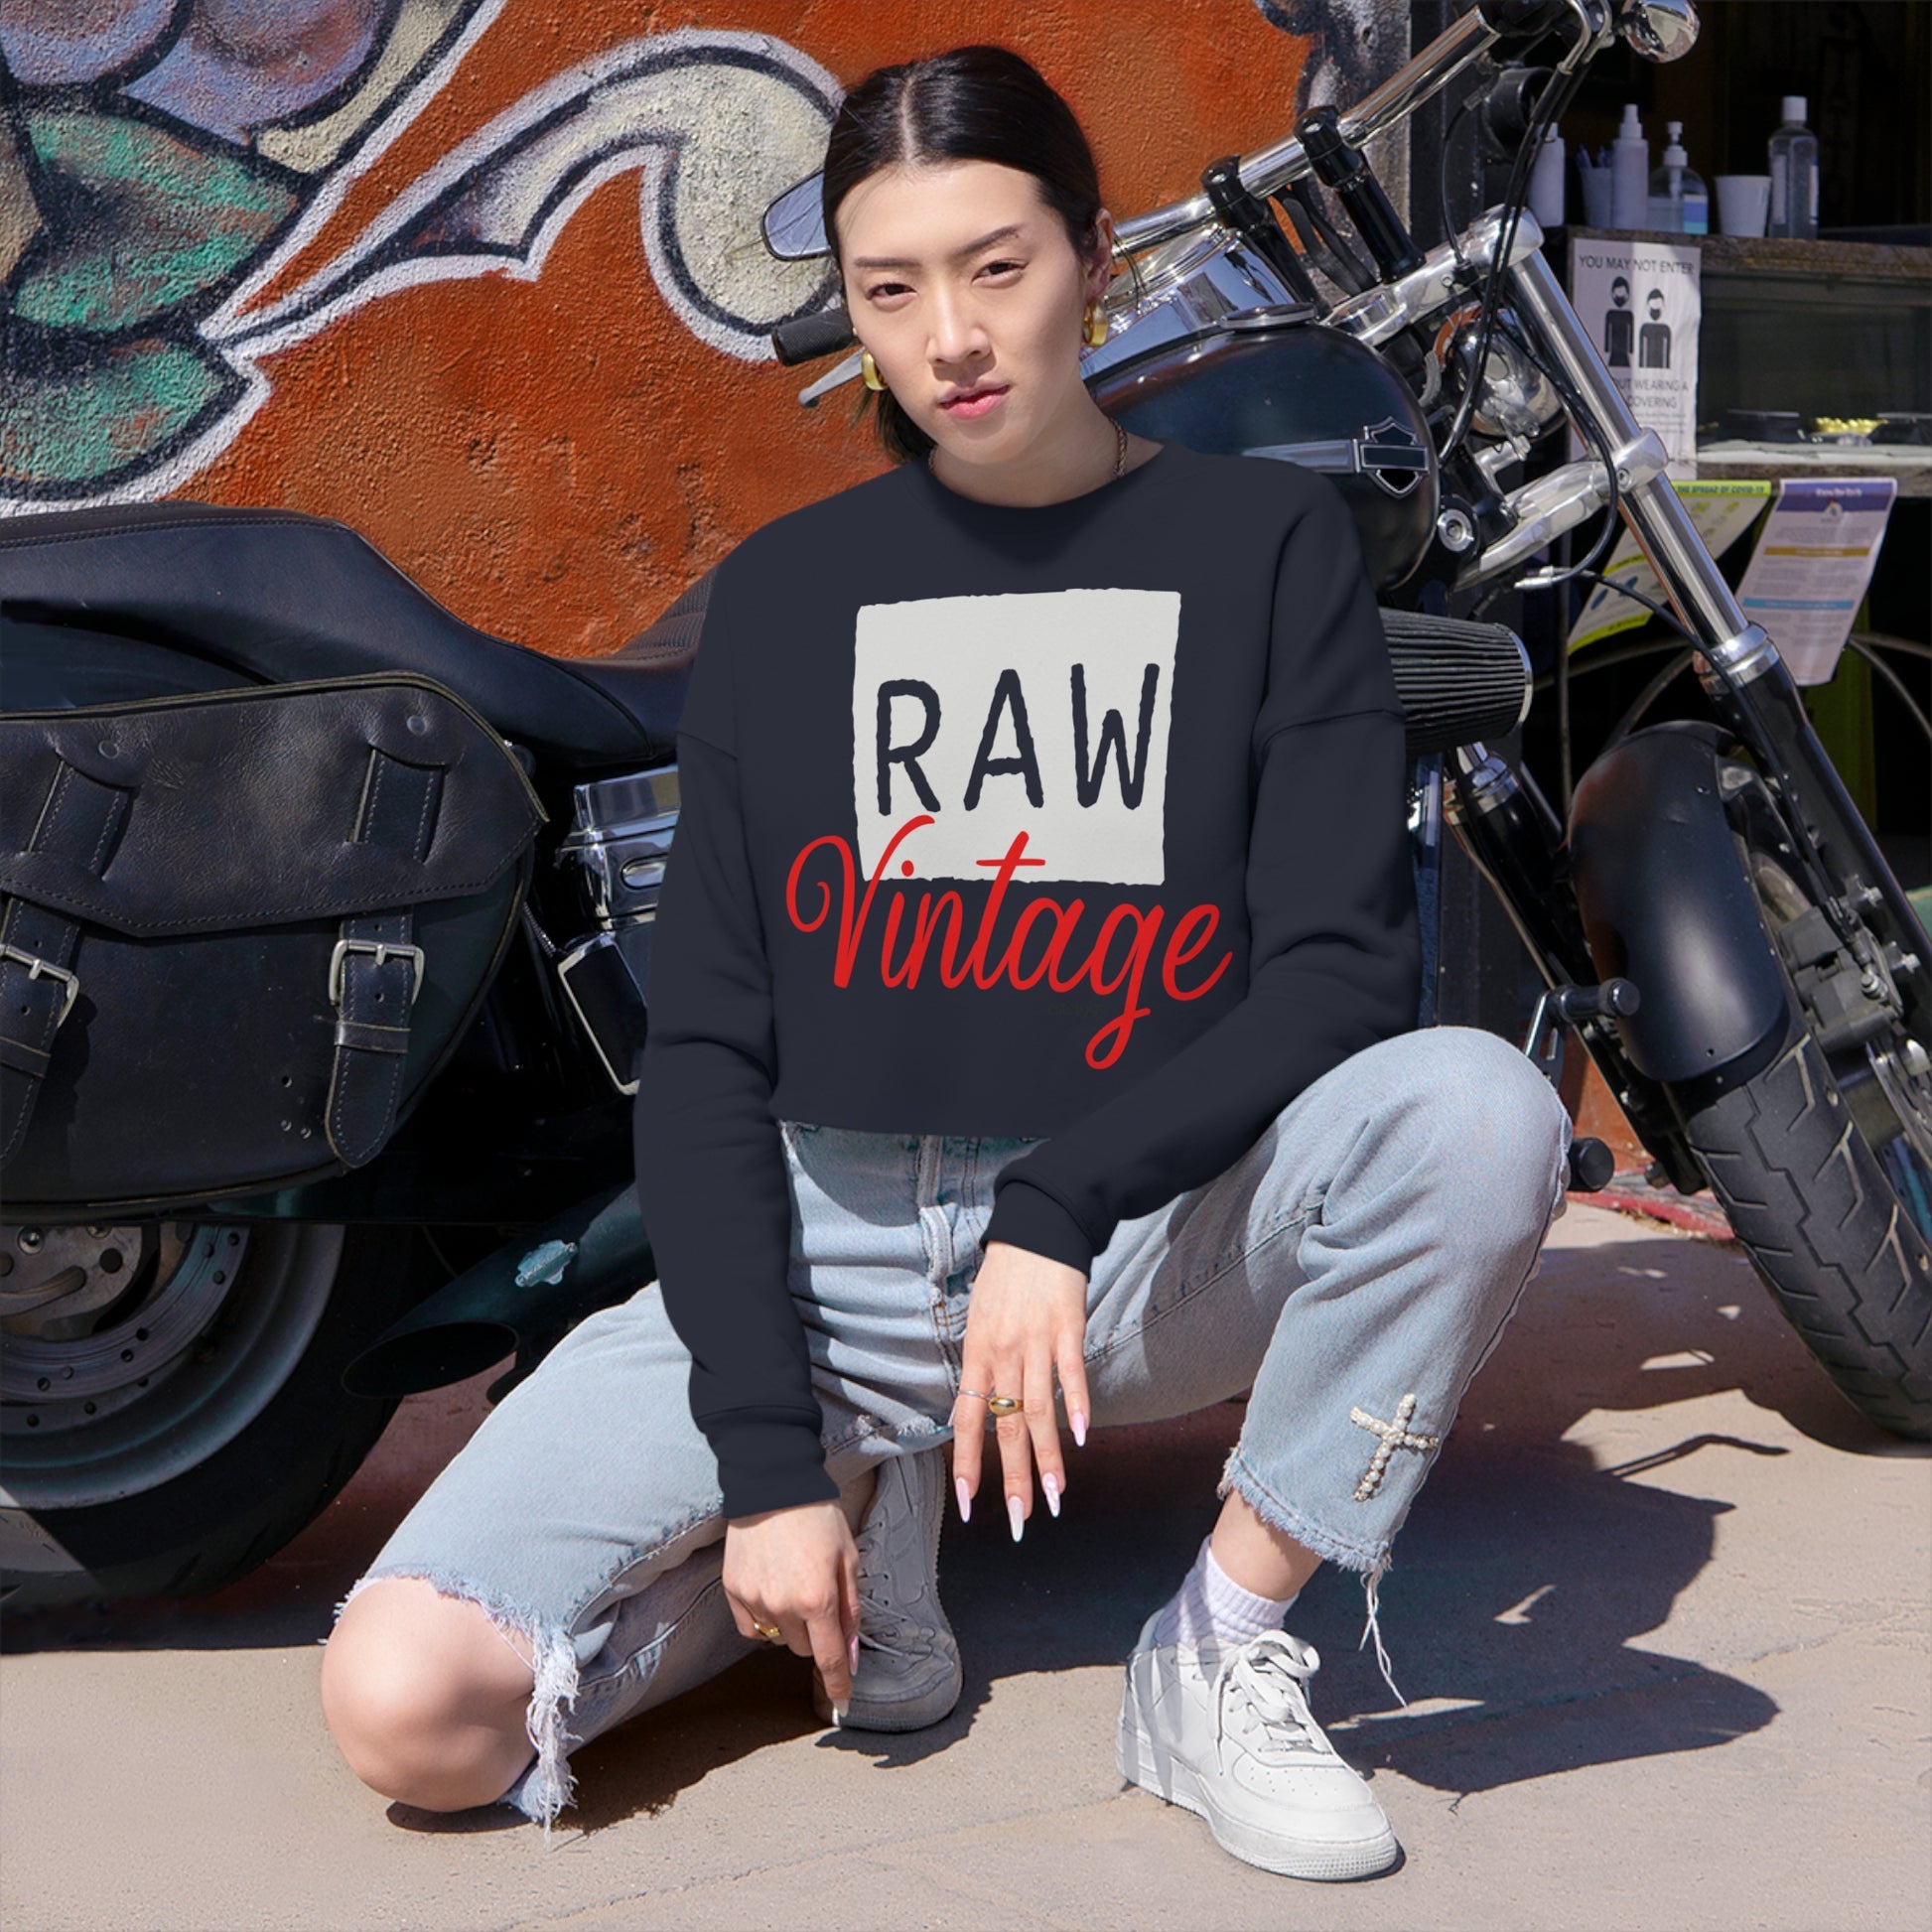 Raw Vintage - Women's Cropped Sweatshirt - Been Dope Supply